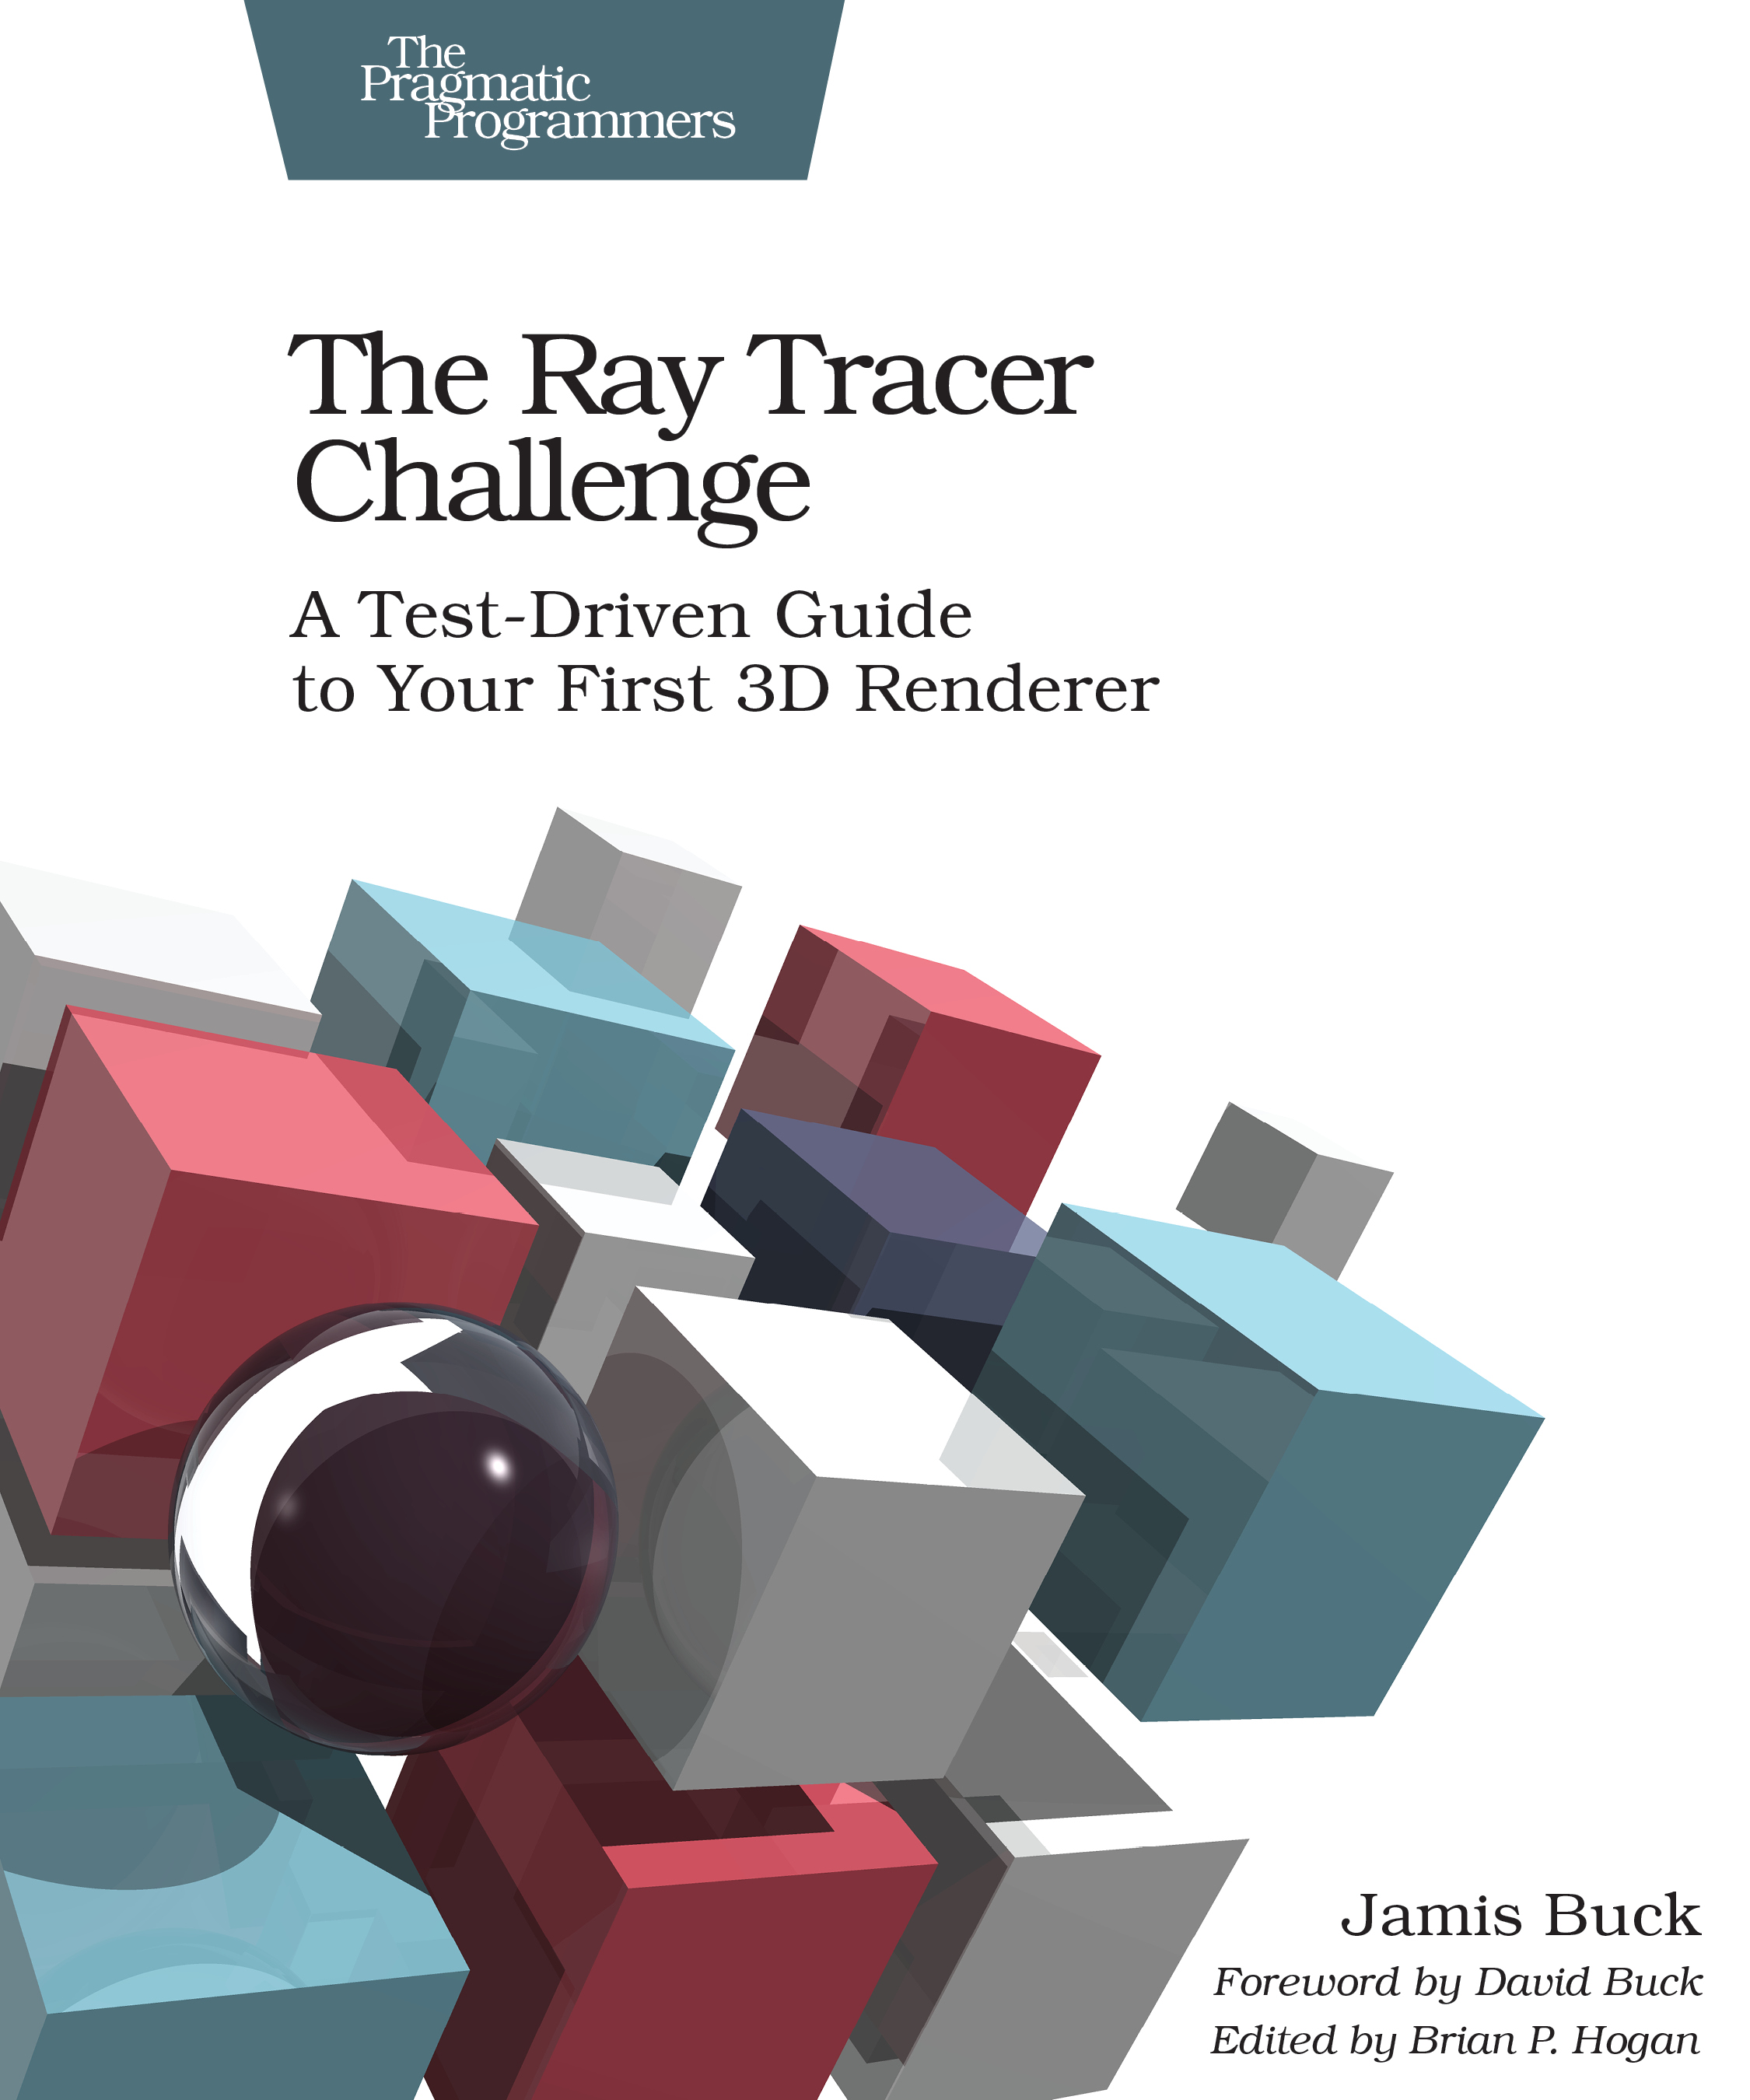 Jamis Buck: Ray Tracer Challenge (2019, Pragmatic Programmers, LLC, The)